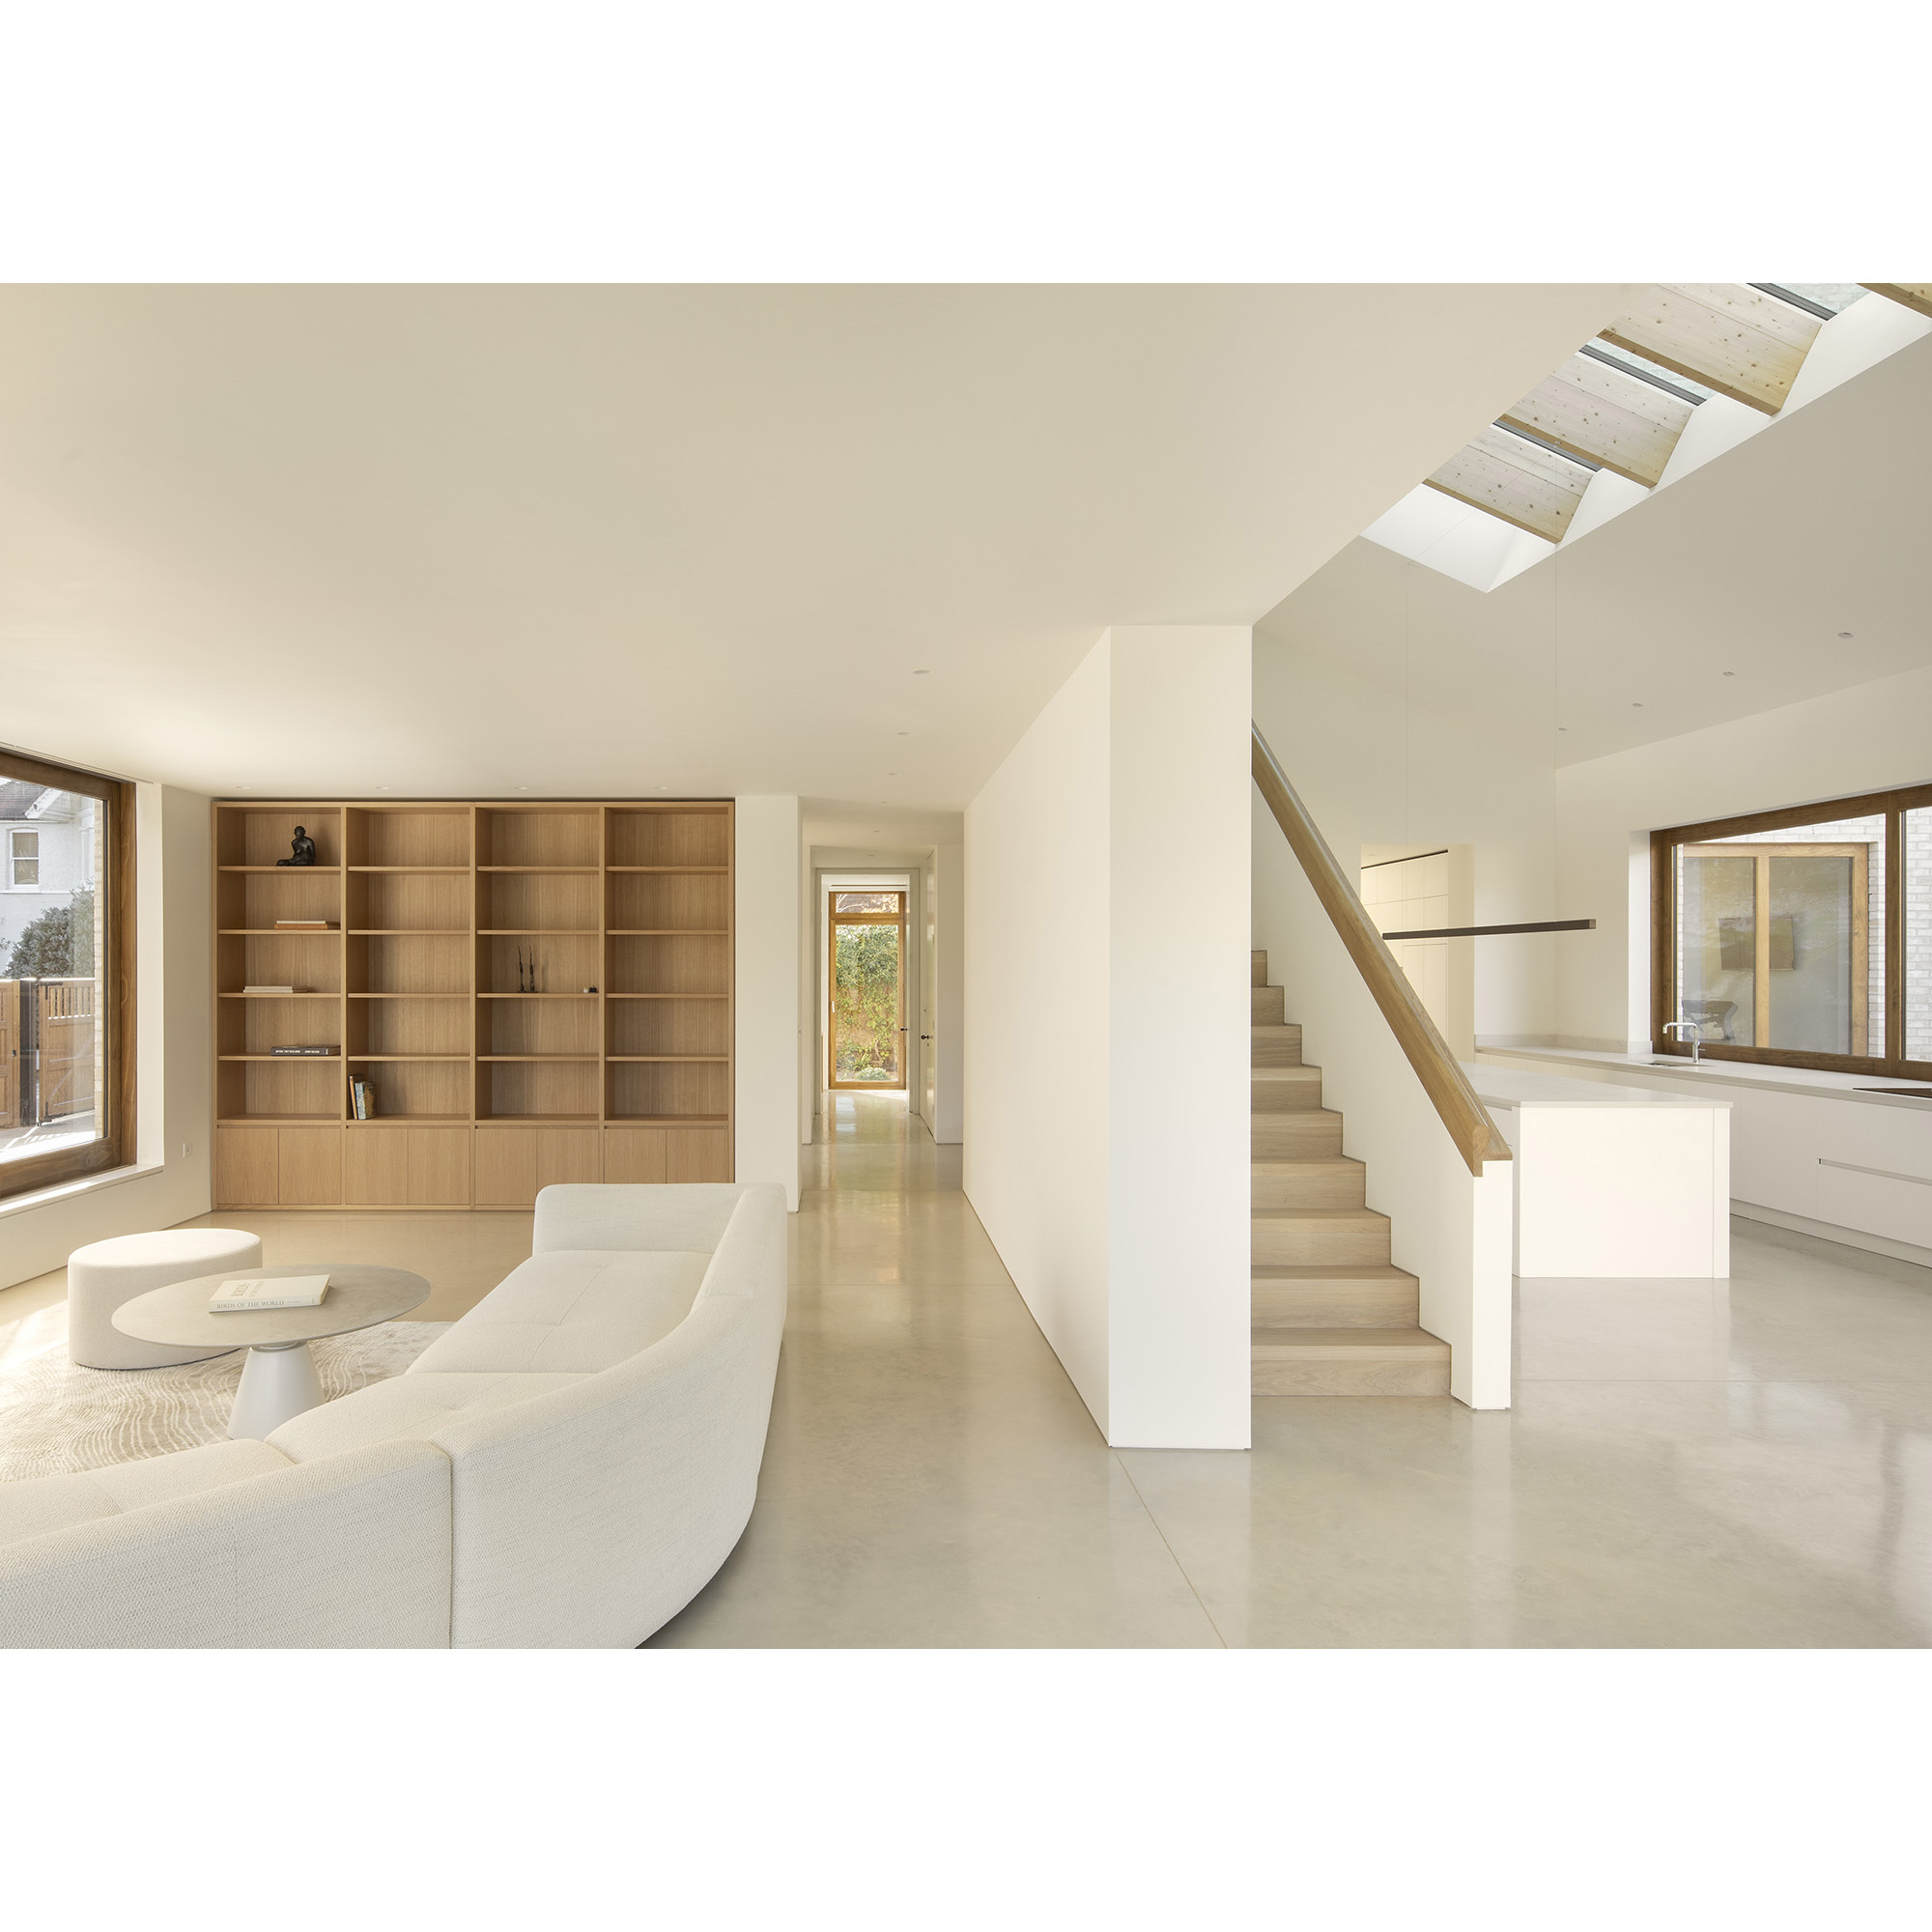 Erbar Mattes Architects Wimbledon London timber frame house